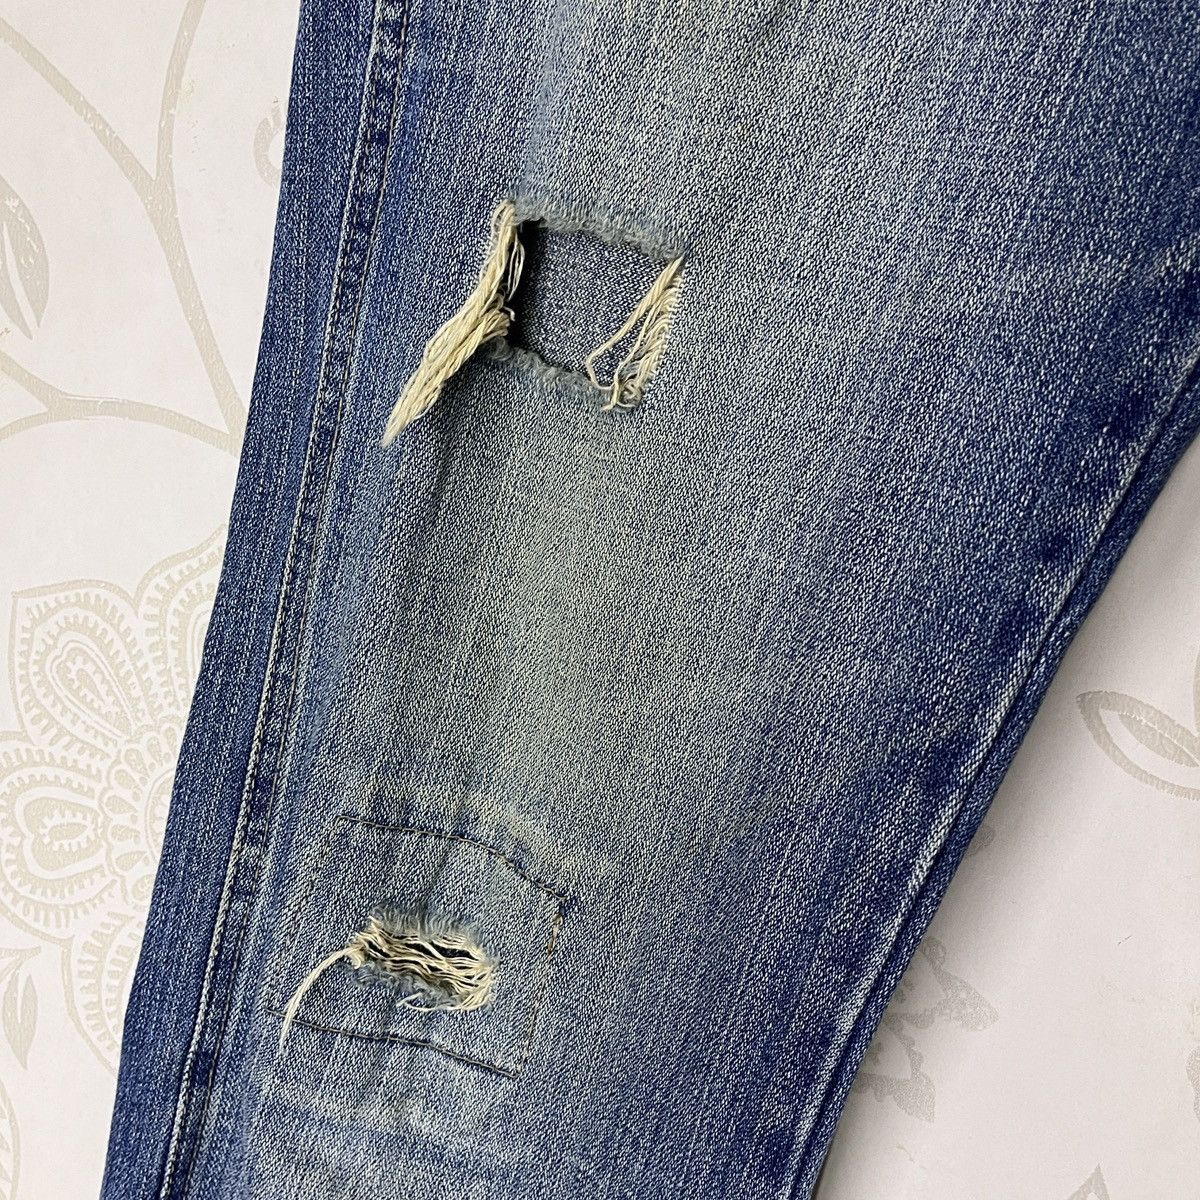 Ripped Three Stones Throw Denim Jeans Avant Garde Pockets - 13